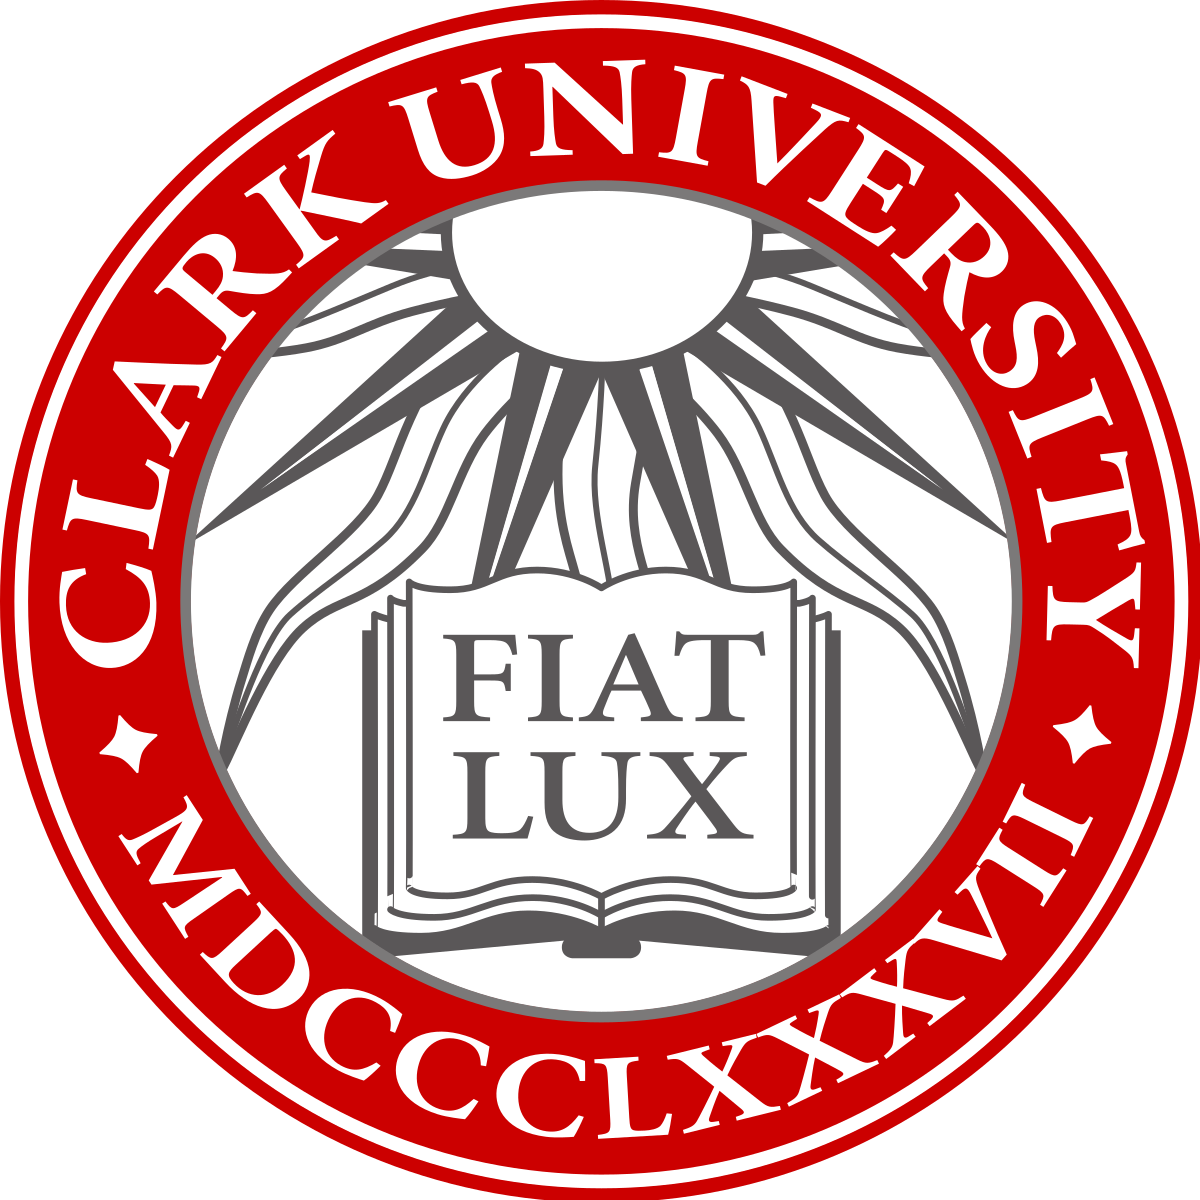 Clark University The Intercollegiate Registry of Academic Costume